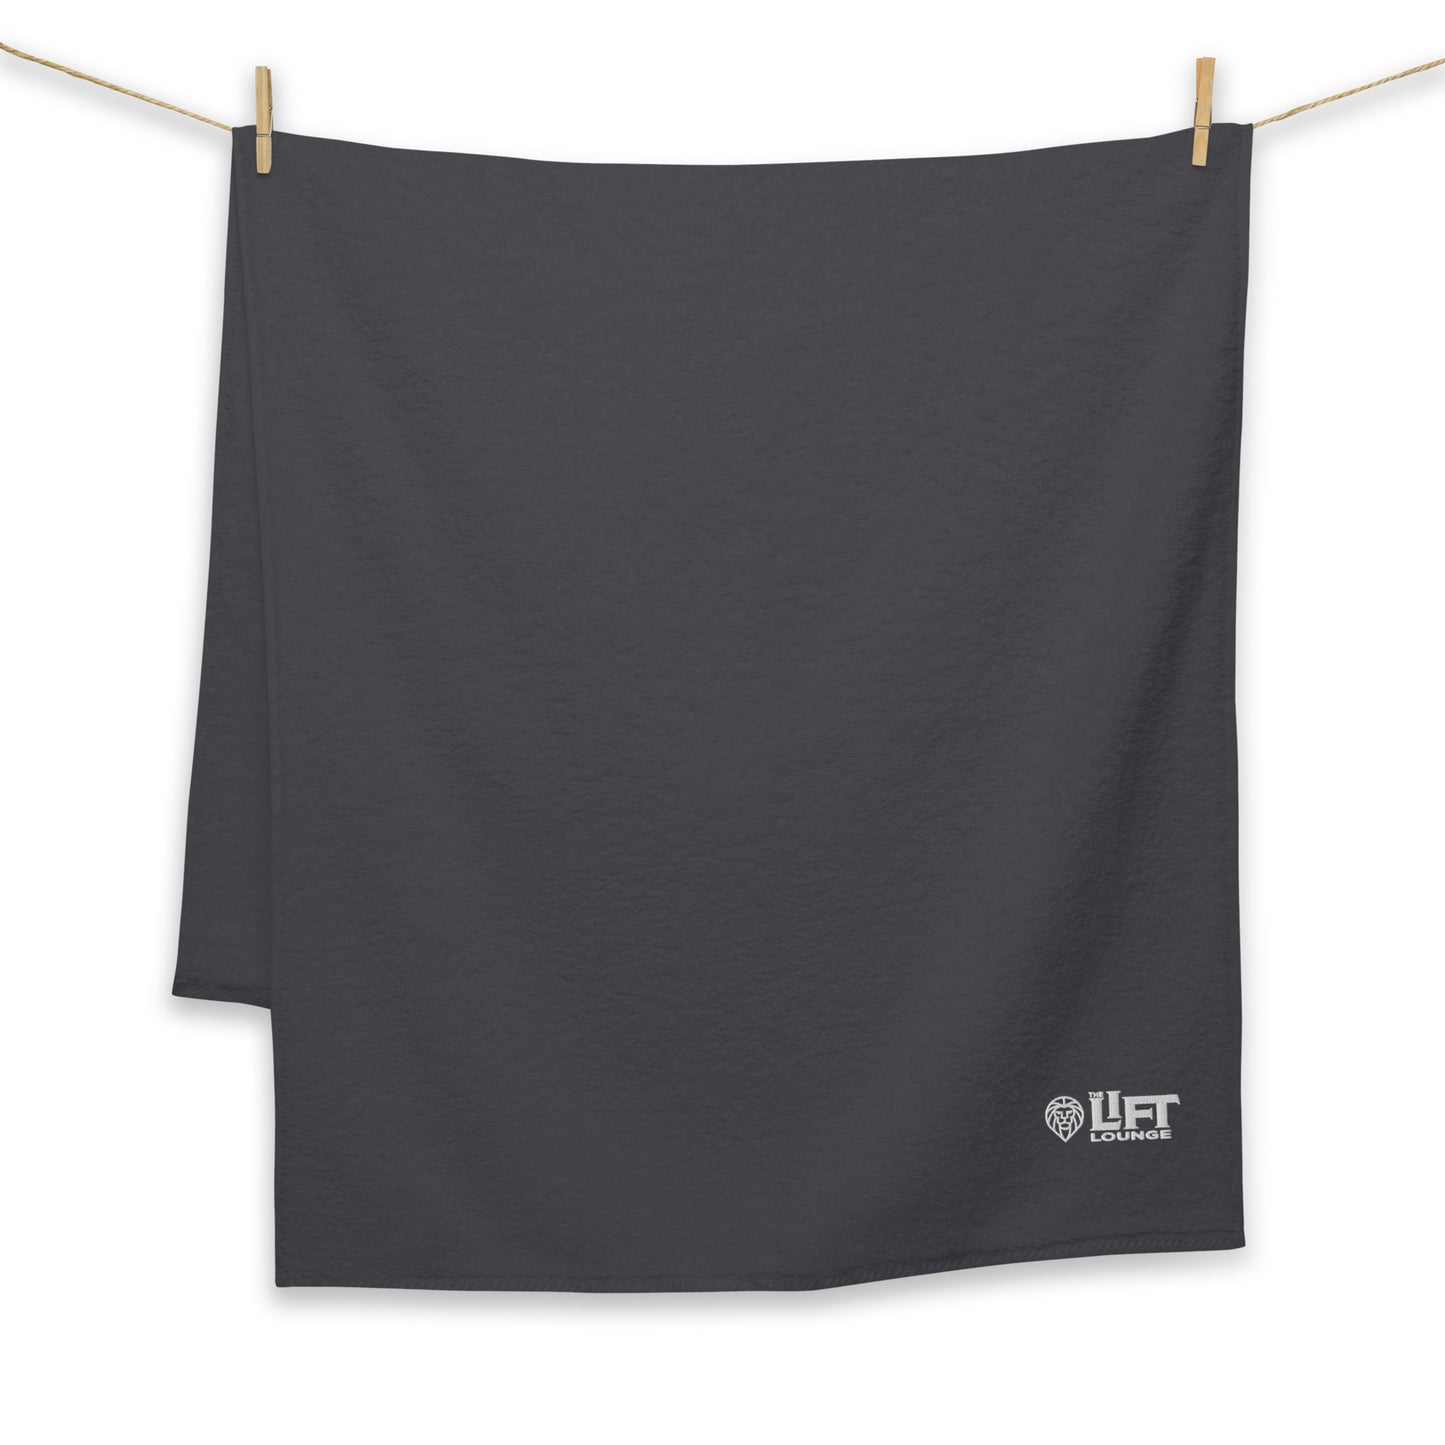 The LIFT Lounge Cotton Towel